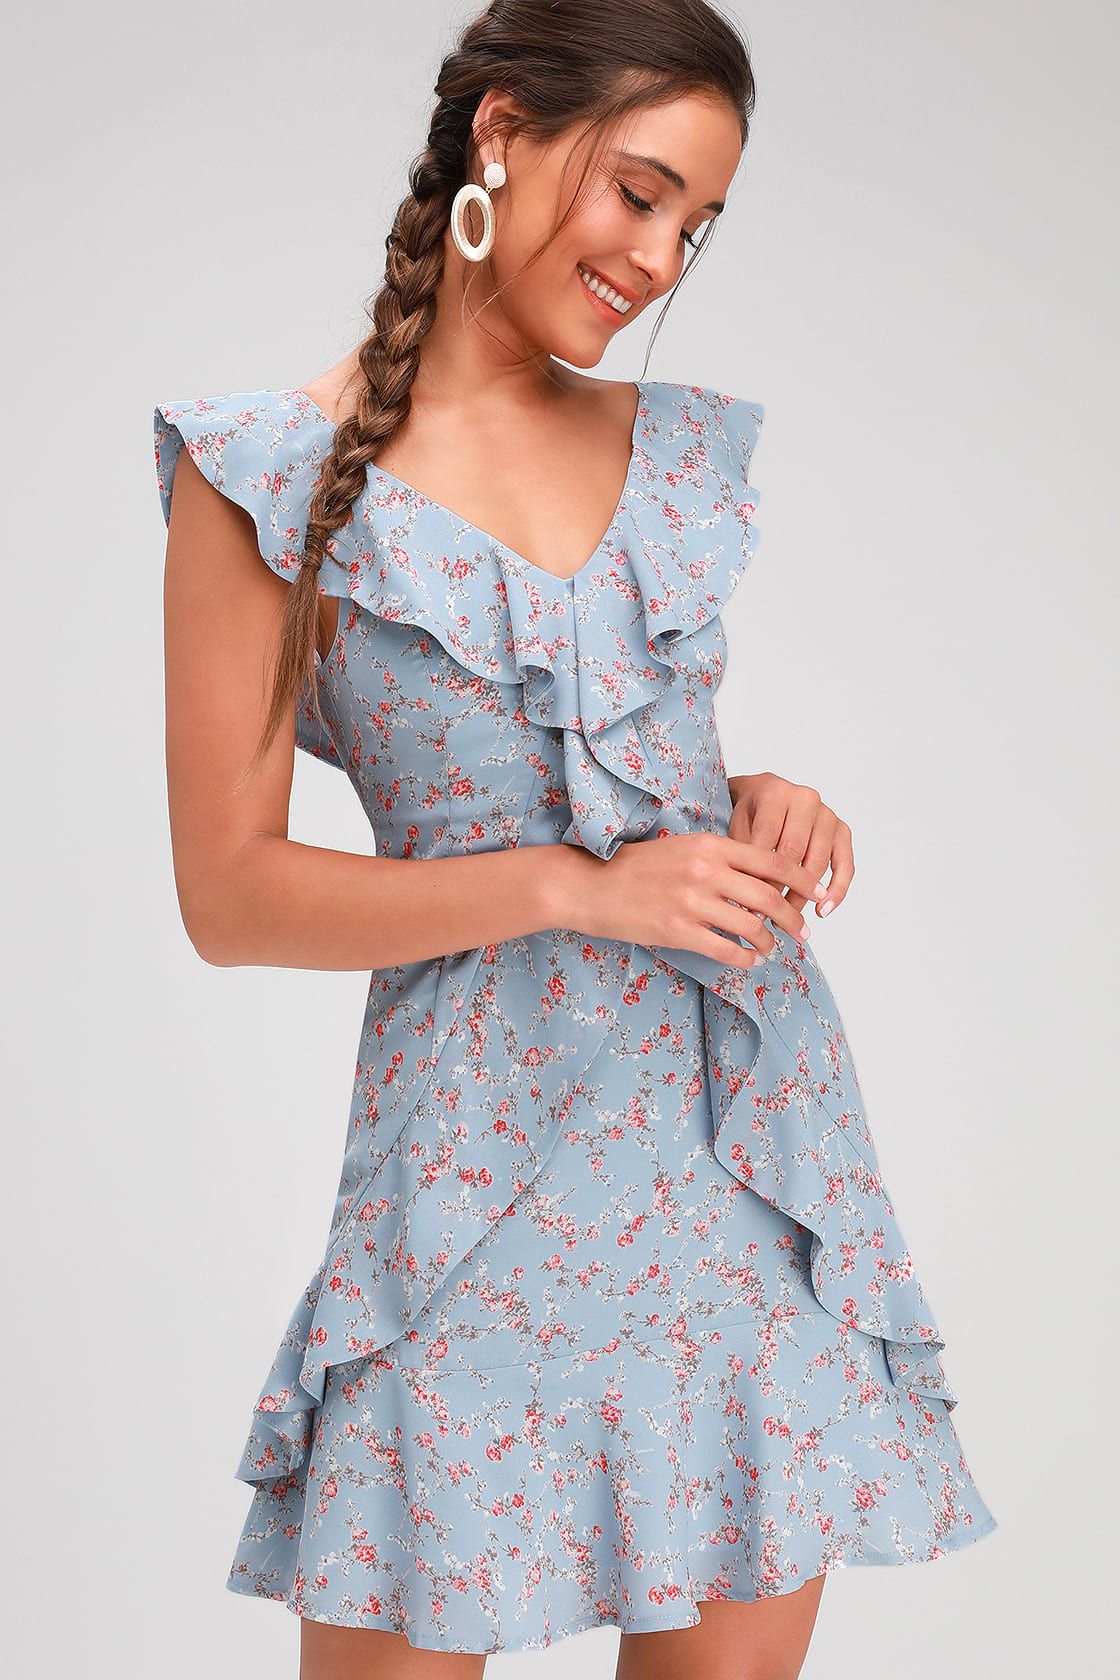 Radiant Rosa Light Blue Floral Print Ruffled Mini Dress | Lulus